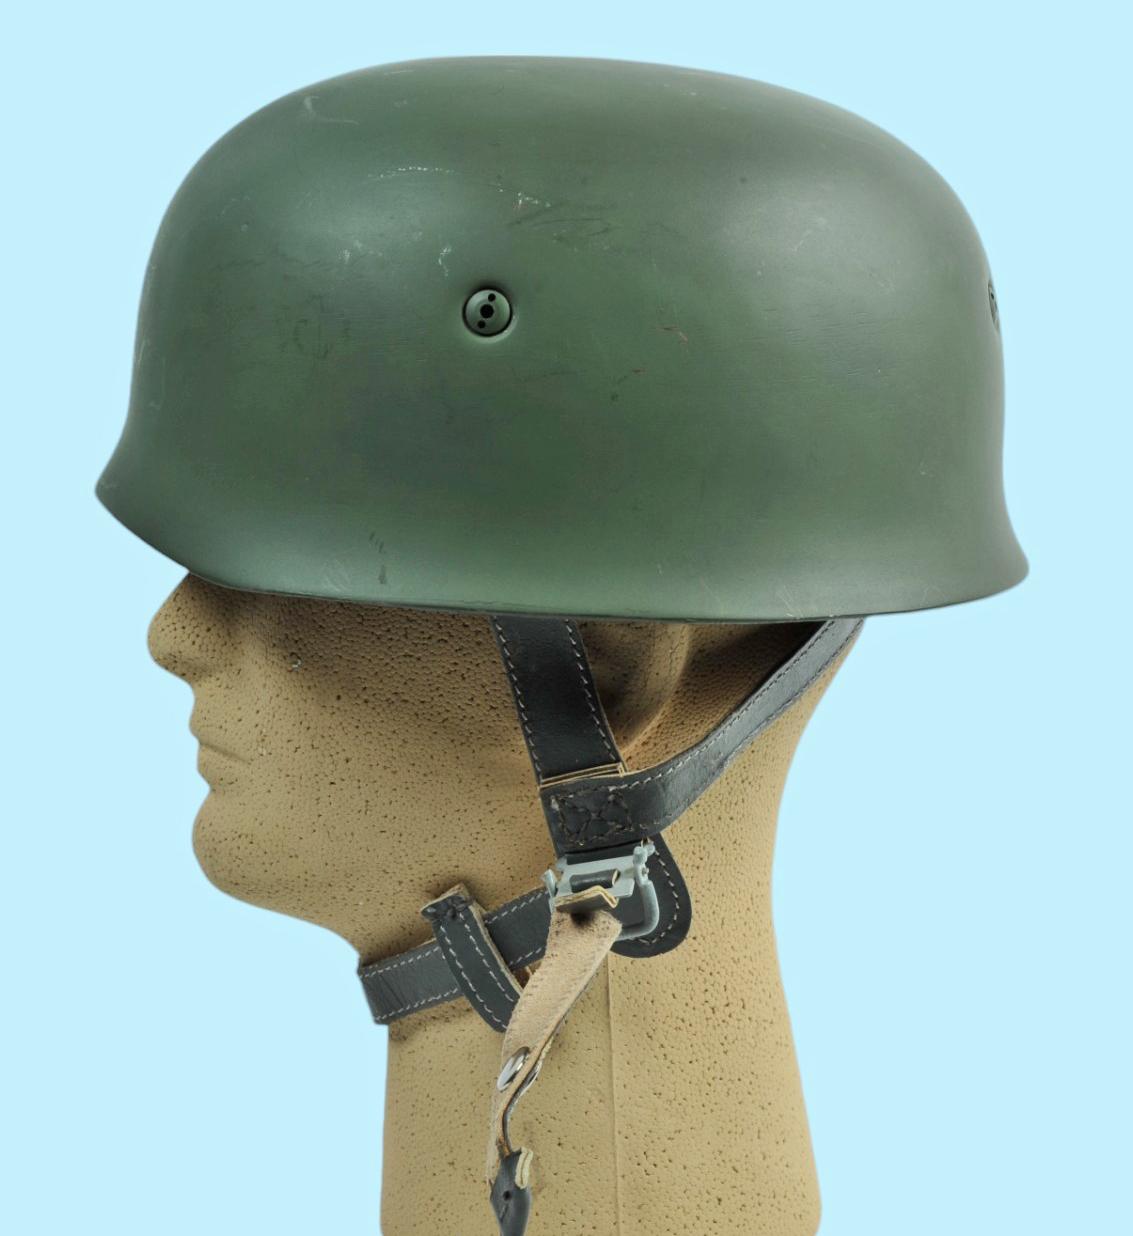 Reproduction German Luftwaffe WWII style Fallschirmjäger Paratrooper Helmet (JMT)